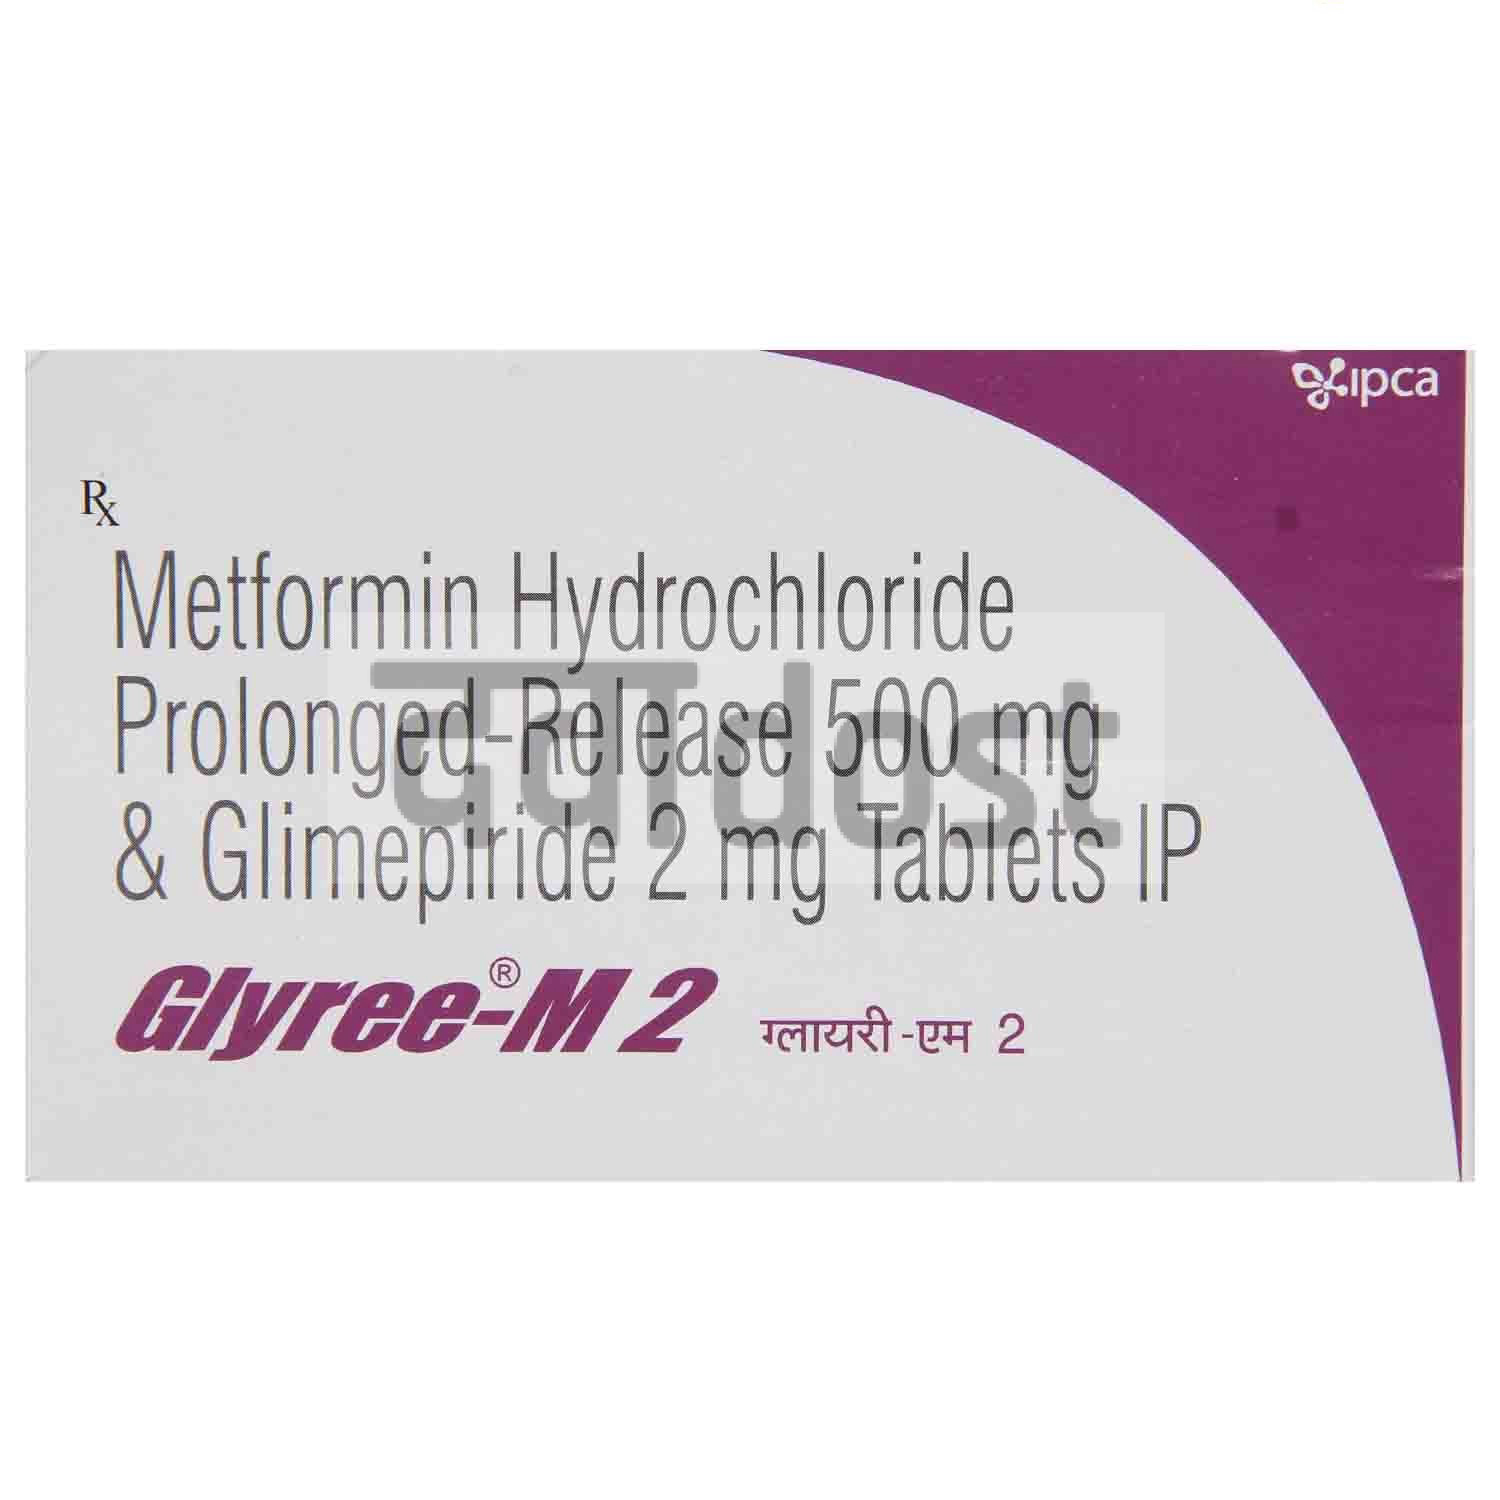 Glyree-M 2 Tablet PR 10s